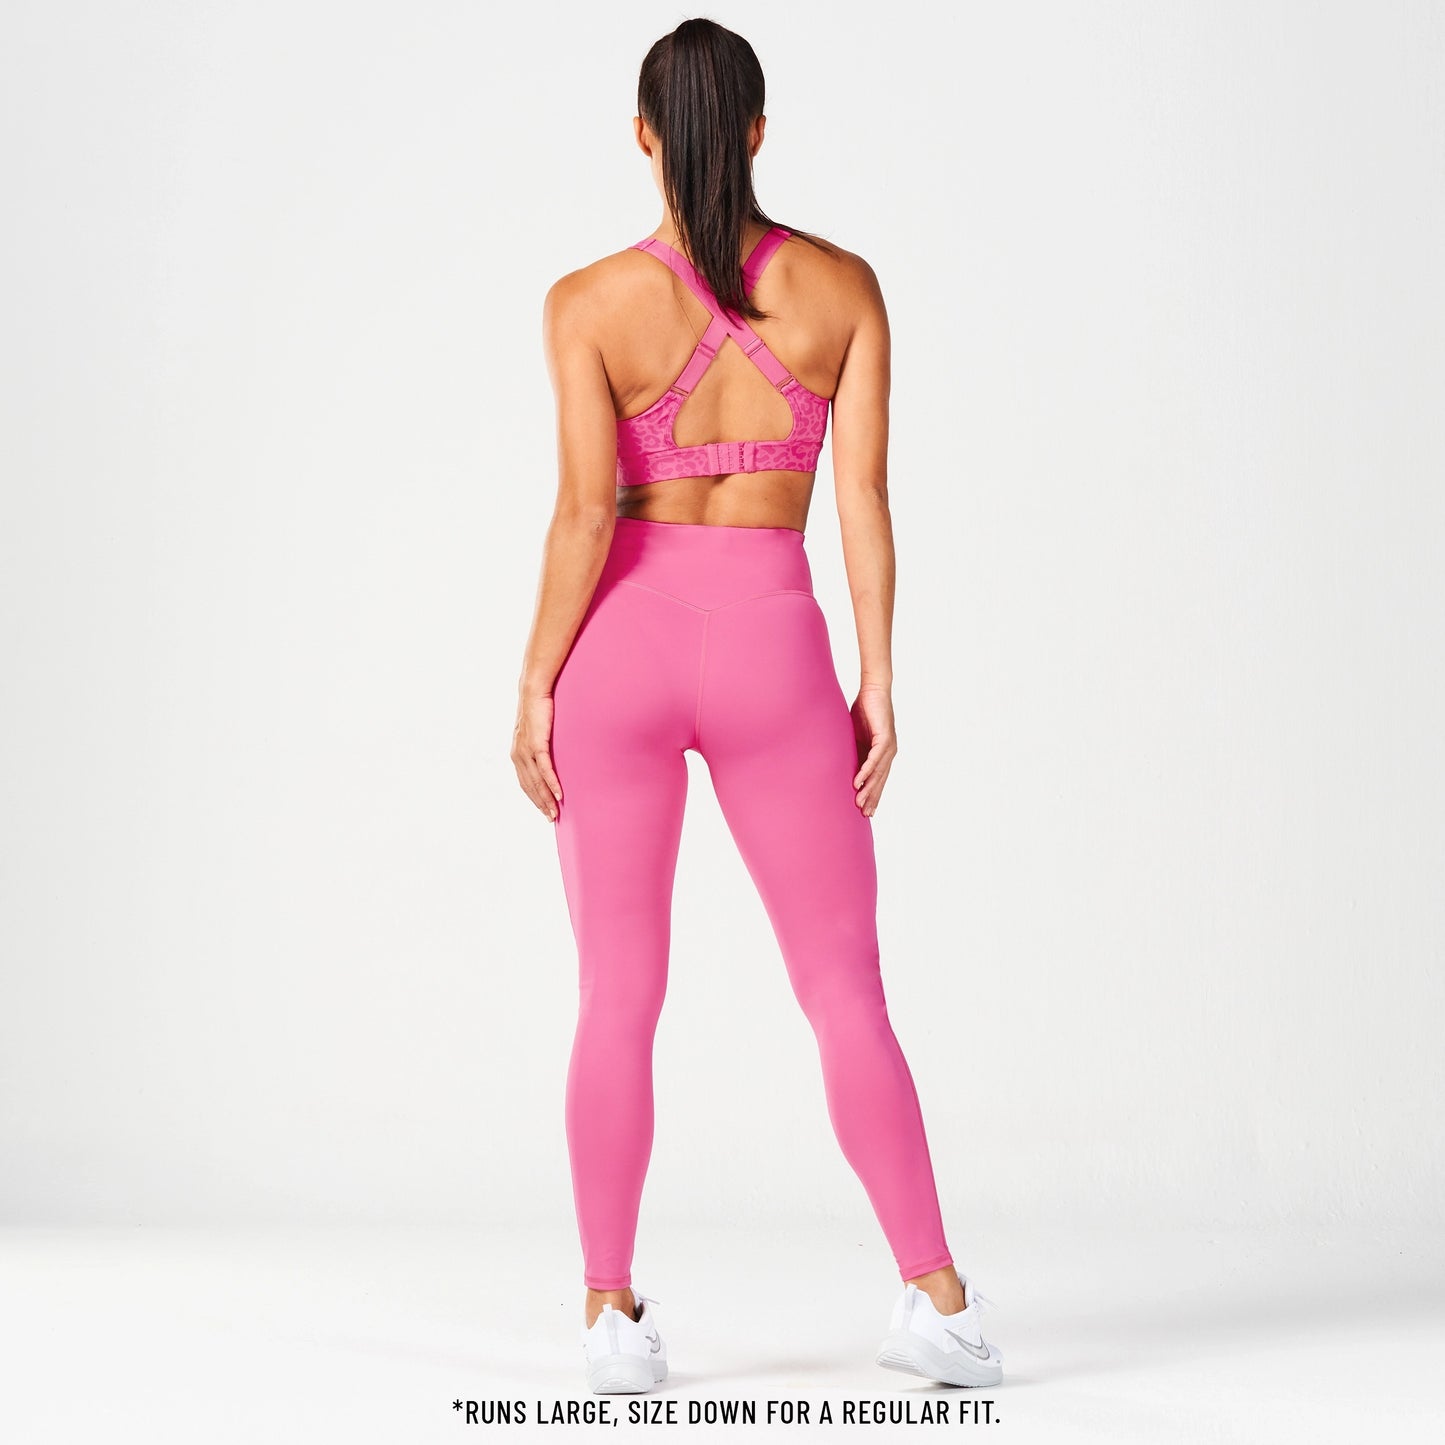 Untamed Panel Leggings 27" - Hot Pink